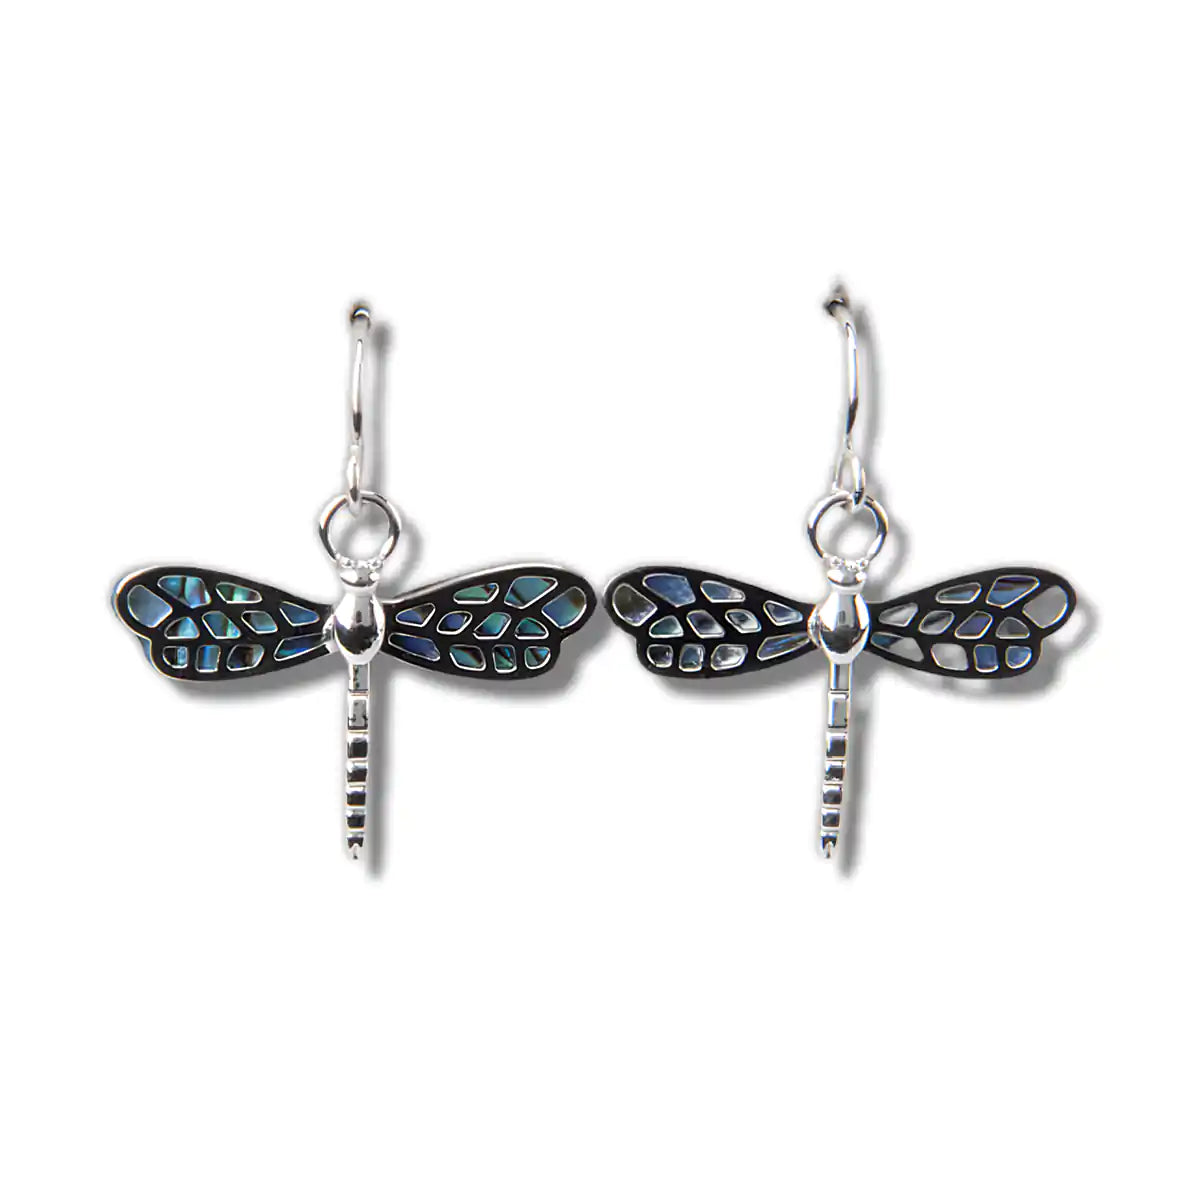 Glacier pearle filigree dragonfly earrings